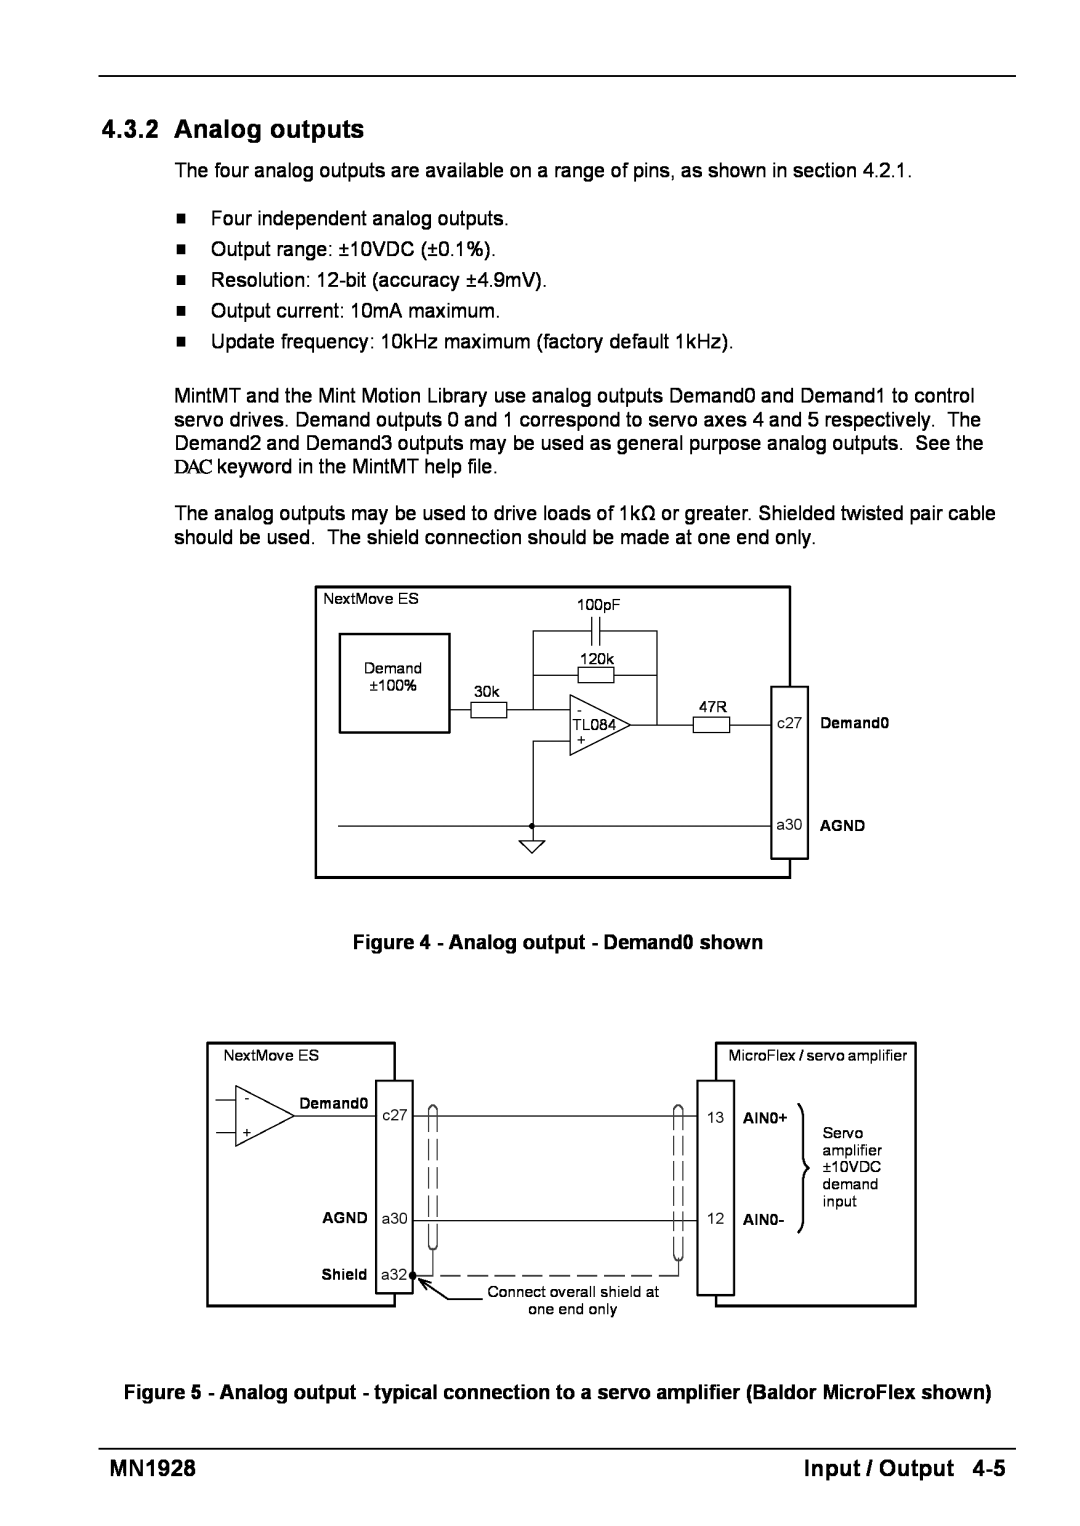 Baldor MN1928 installation manual Analog outputs, Input / Output, Analog output - Demand0 shown 